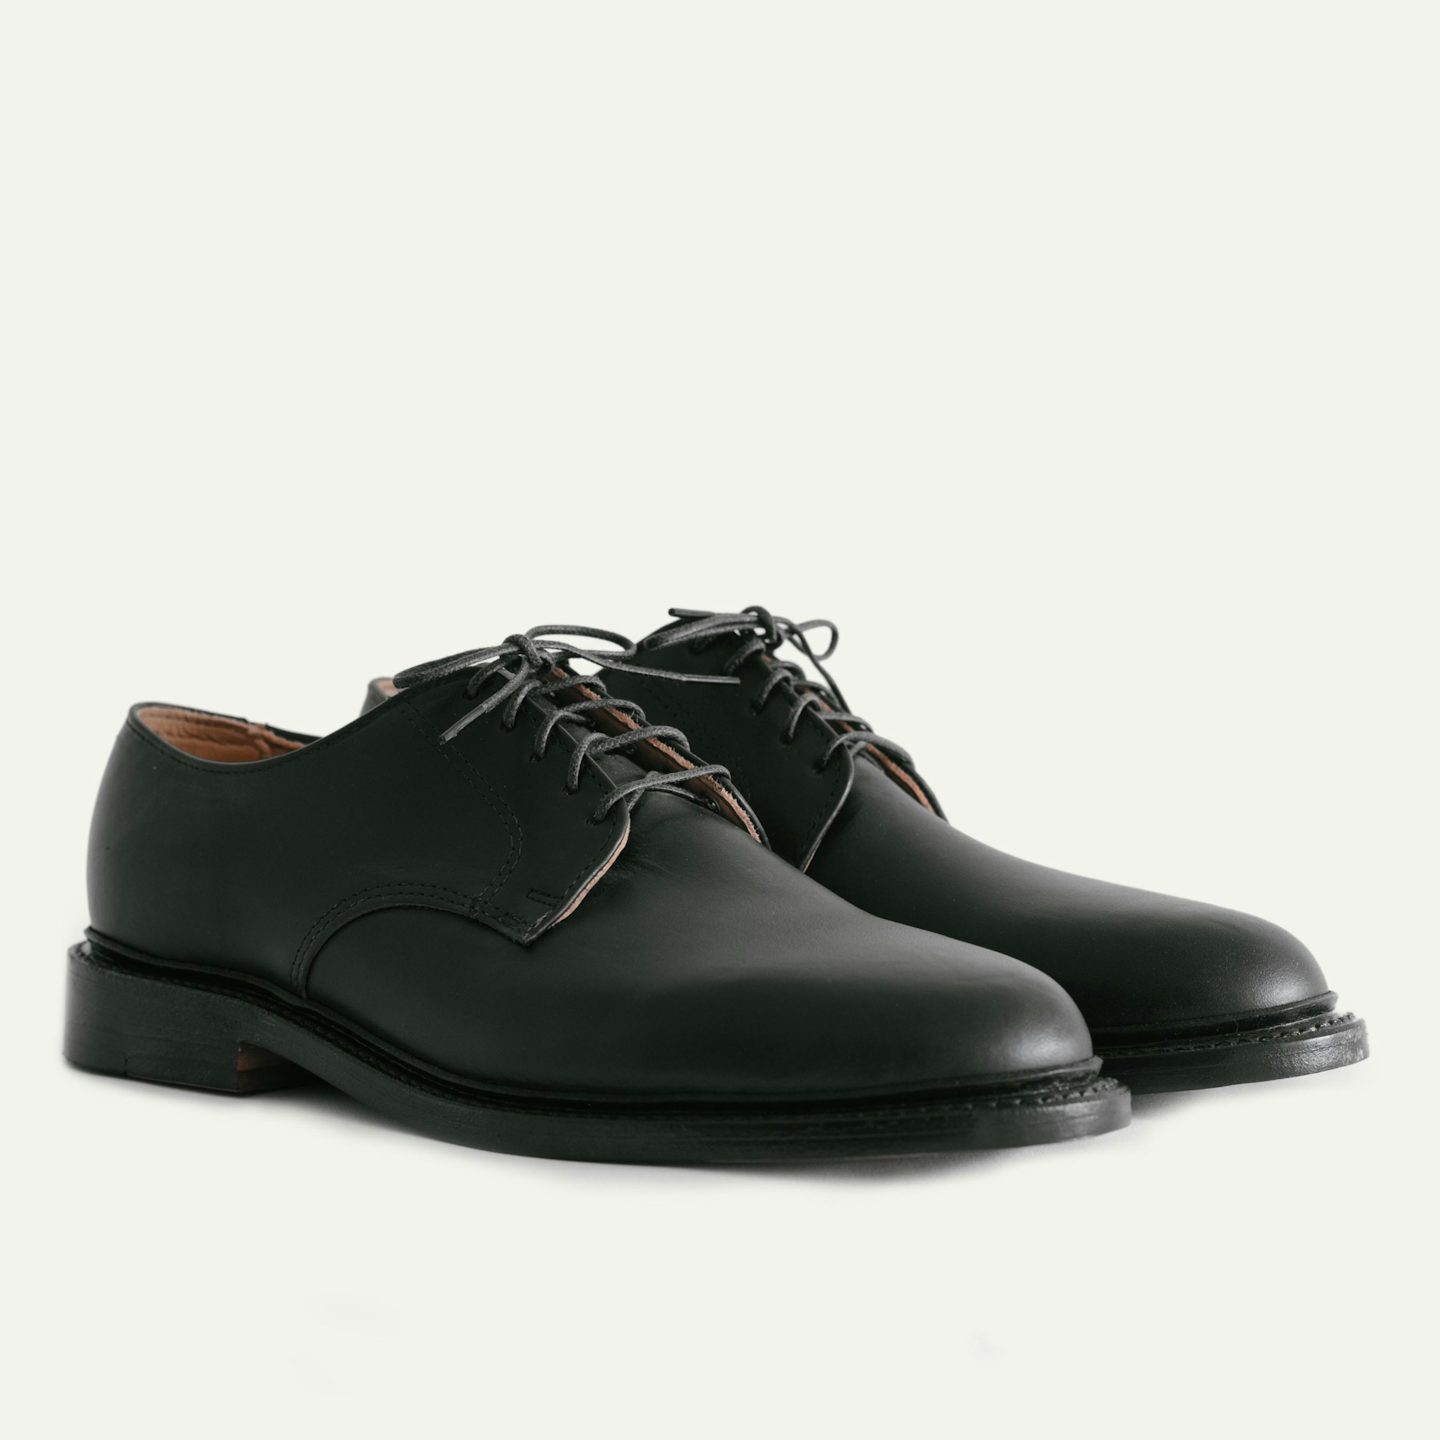 Plain Toe Blucher - Black Chromexcel, Leather Sole with Dovetail